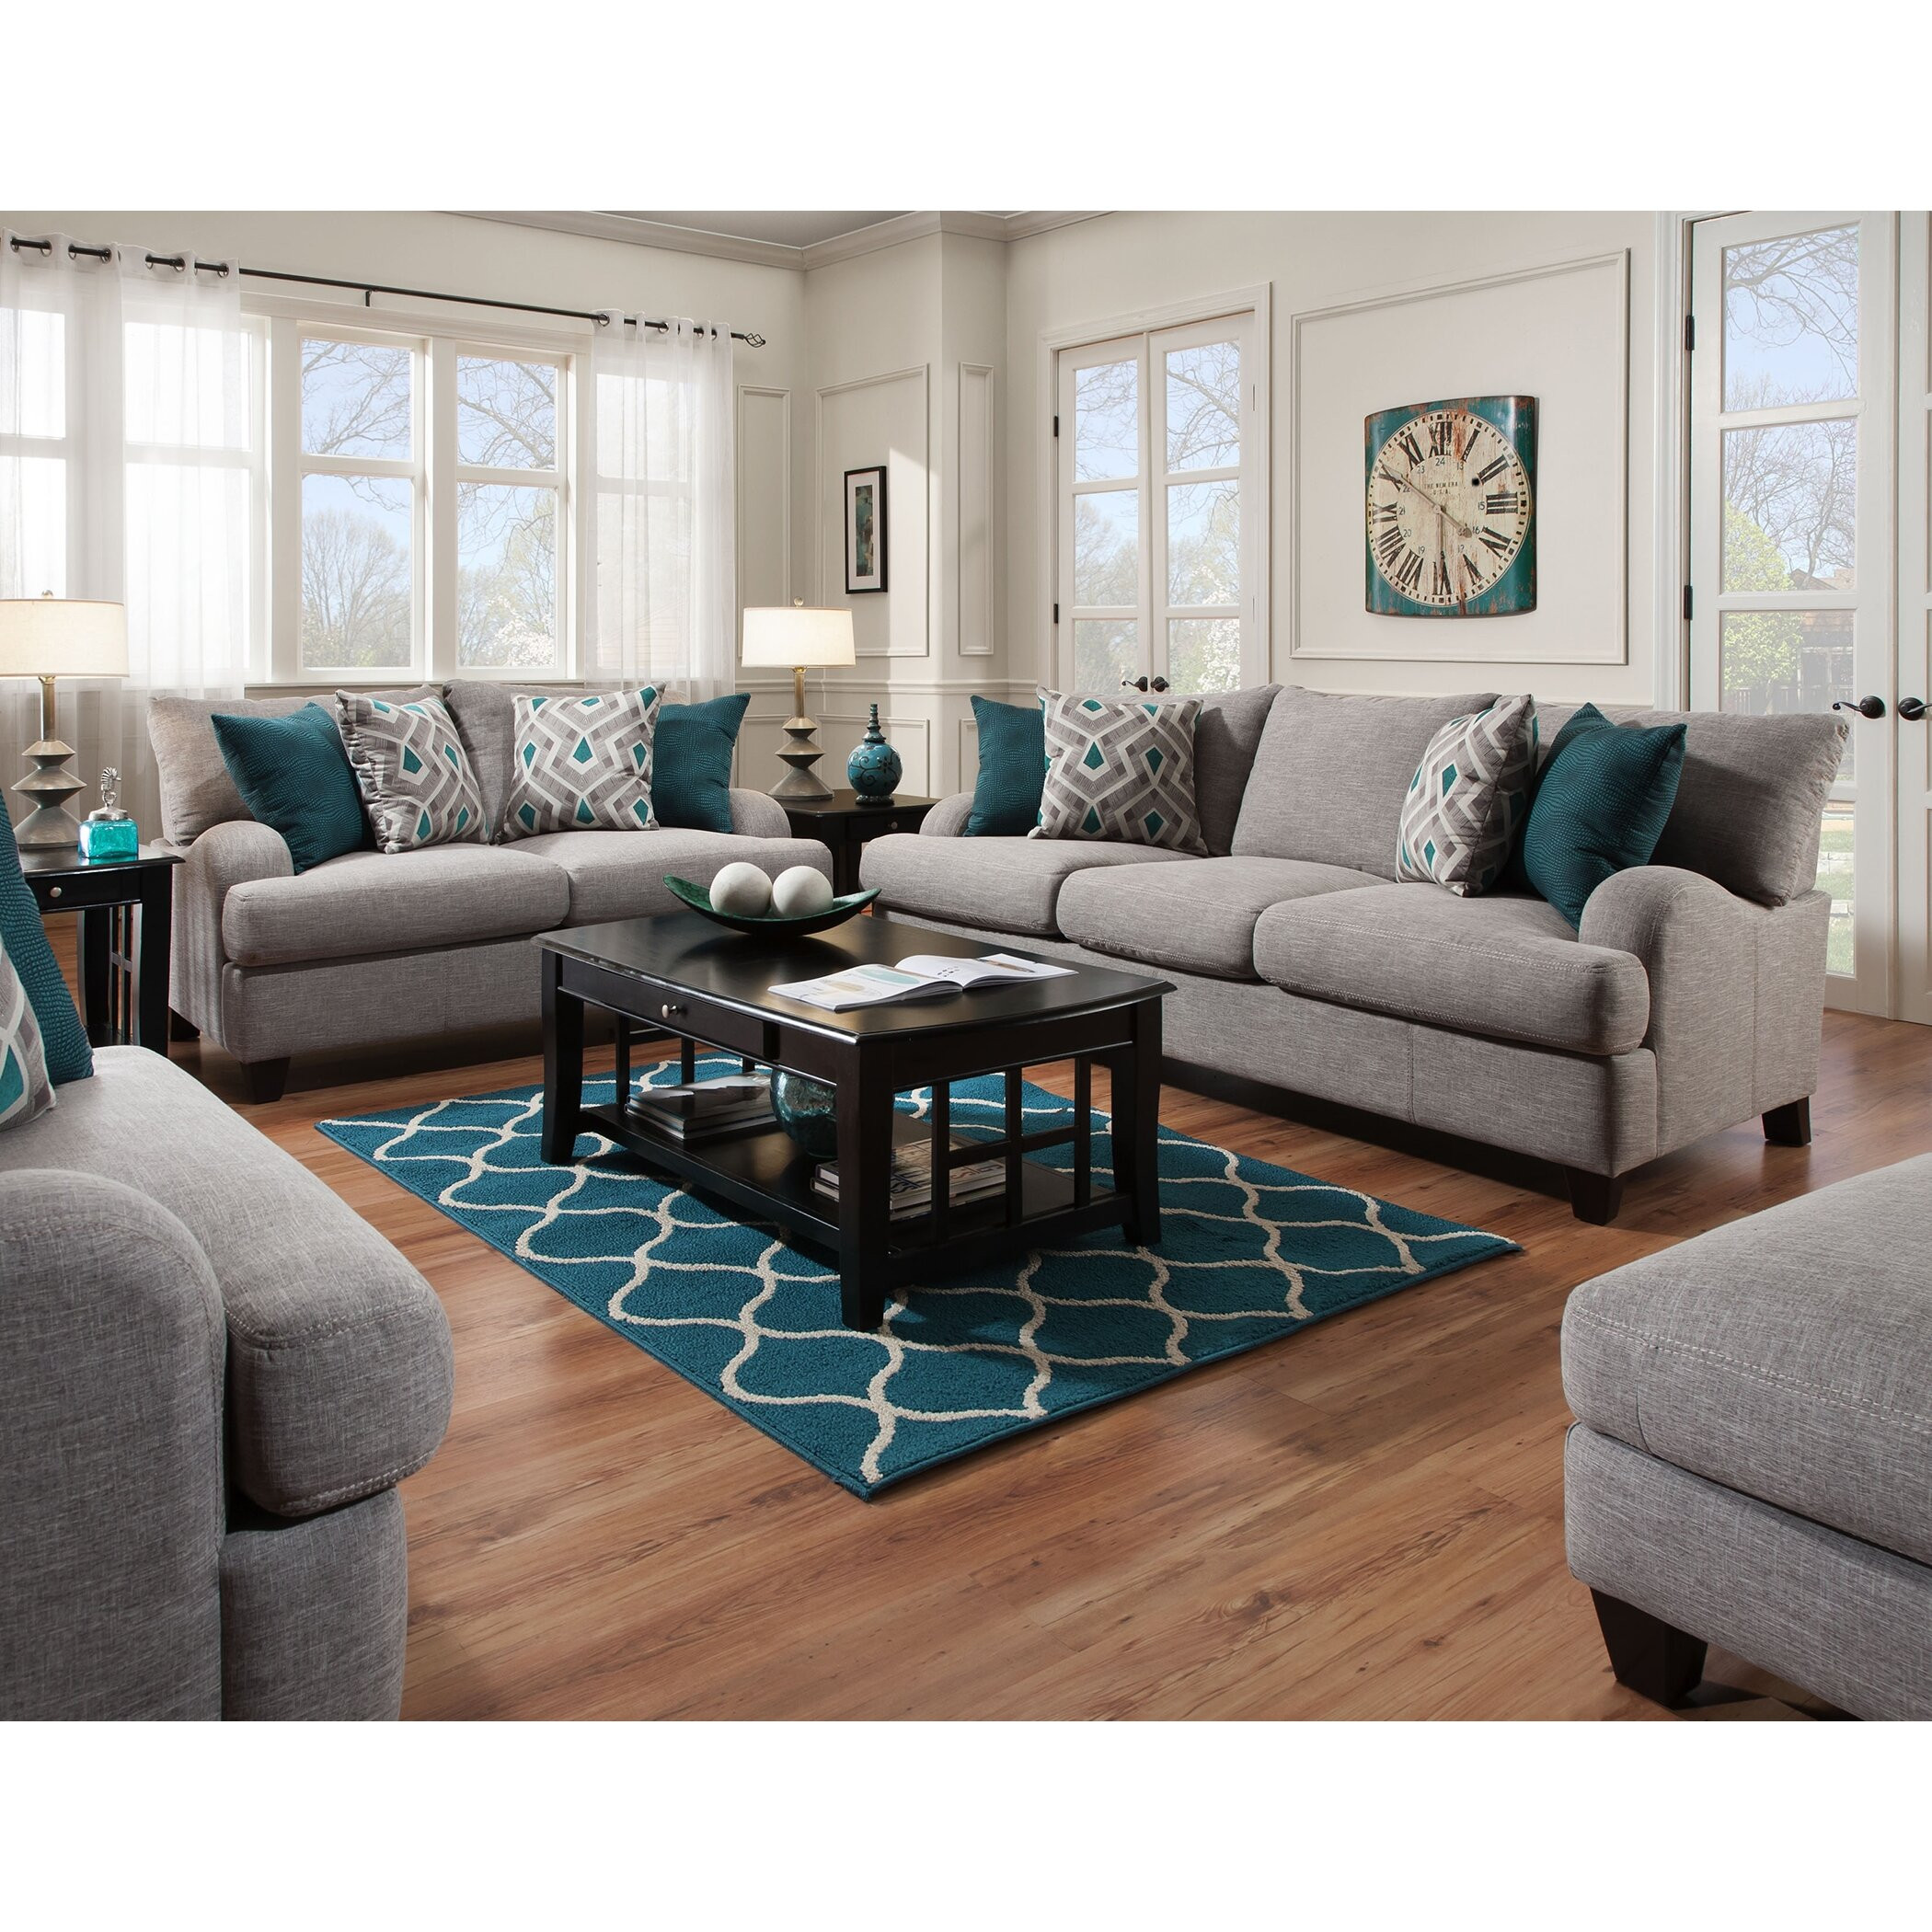 Wayfair Living Room Ideas
 Living Room Furniture Wayfair – Modern House